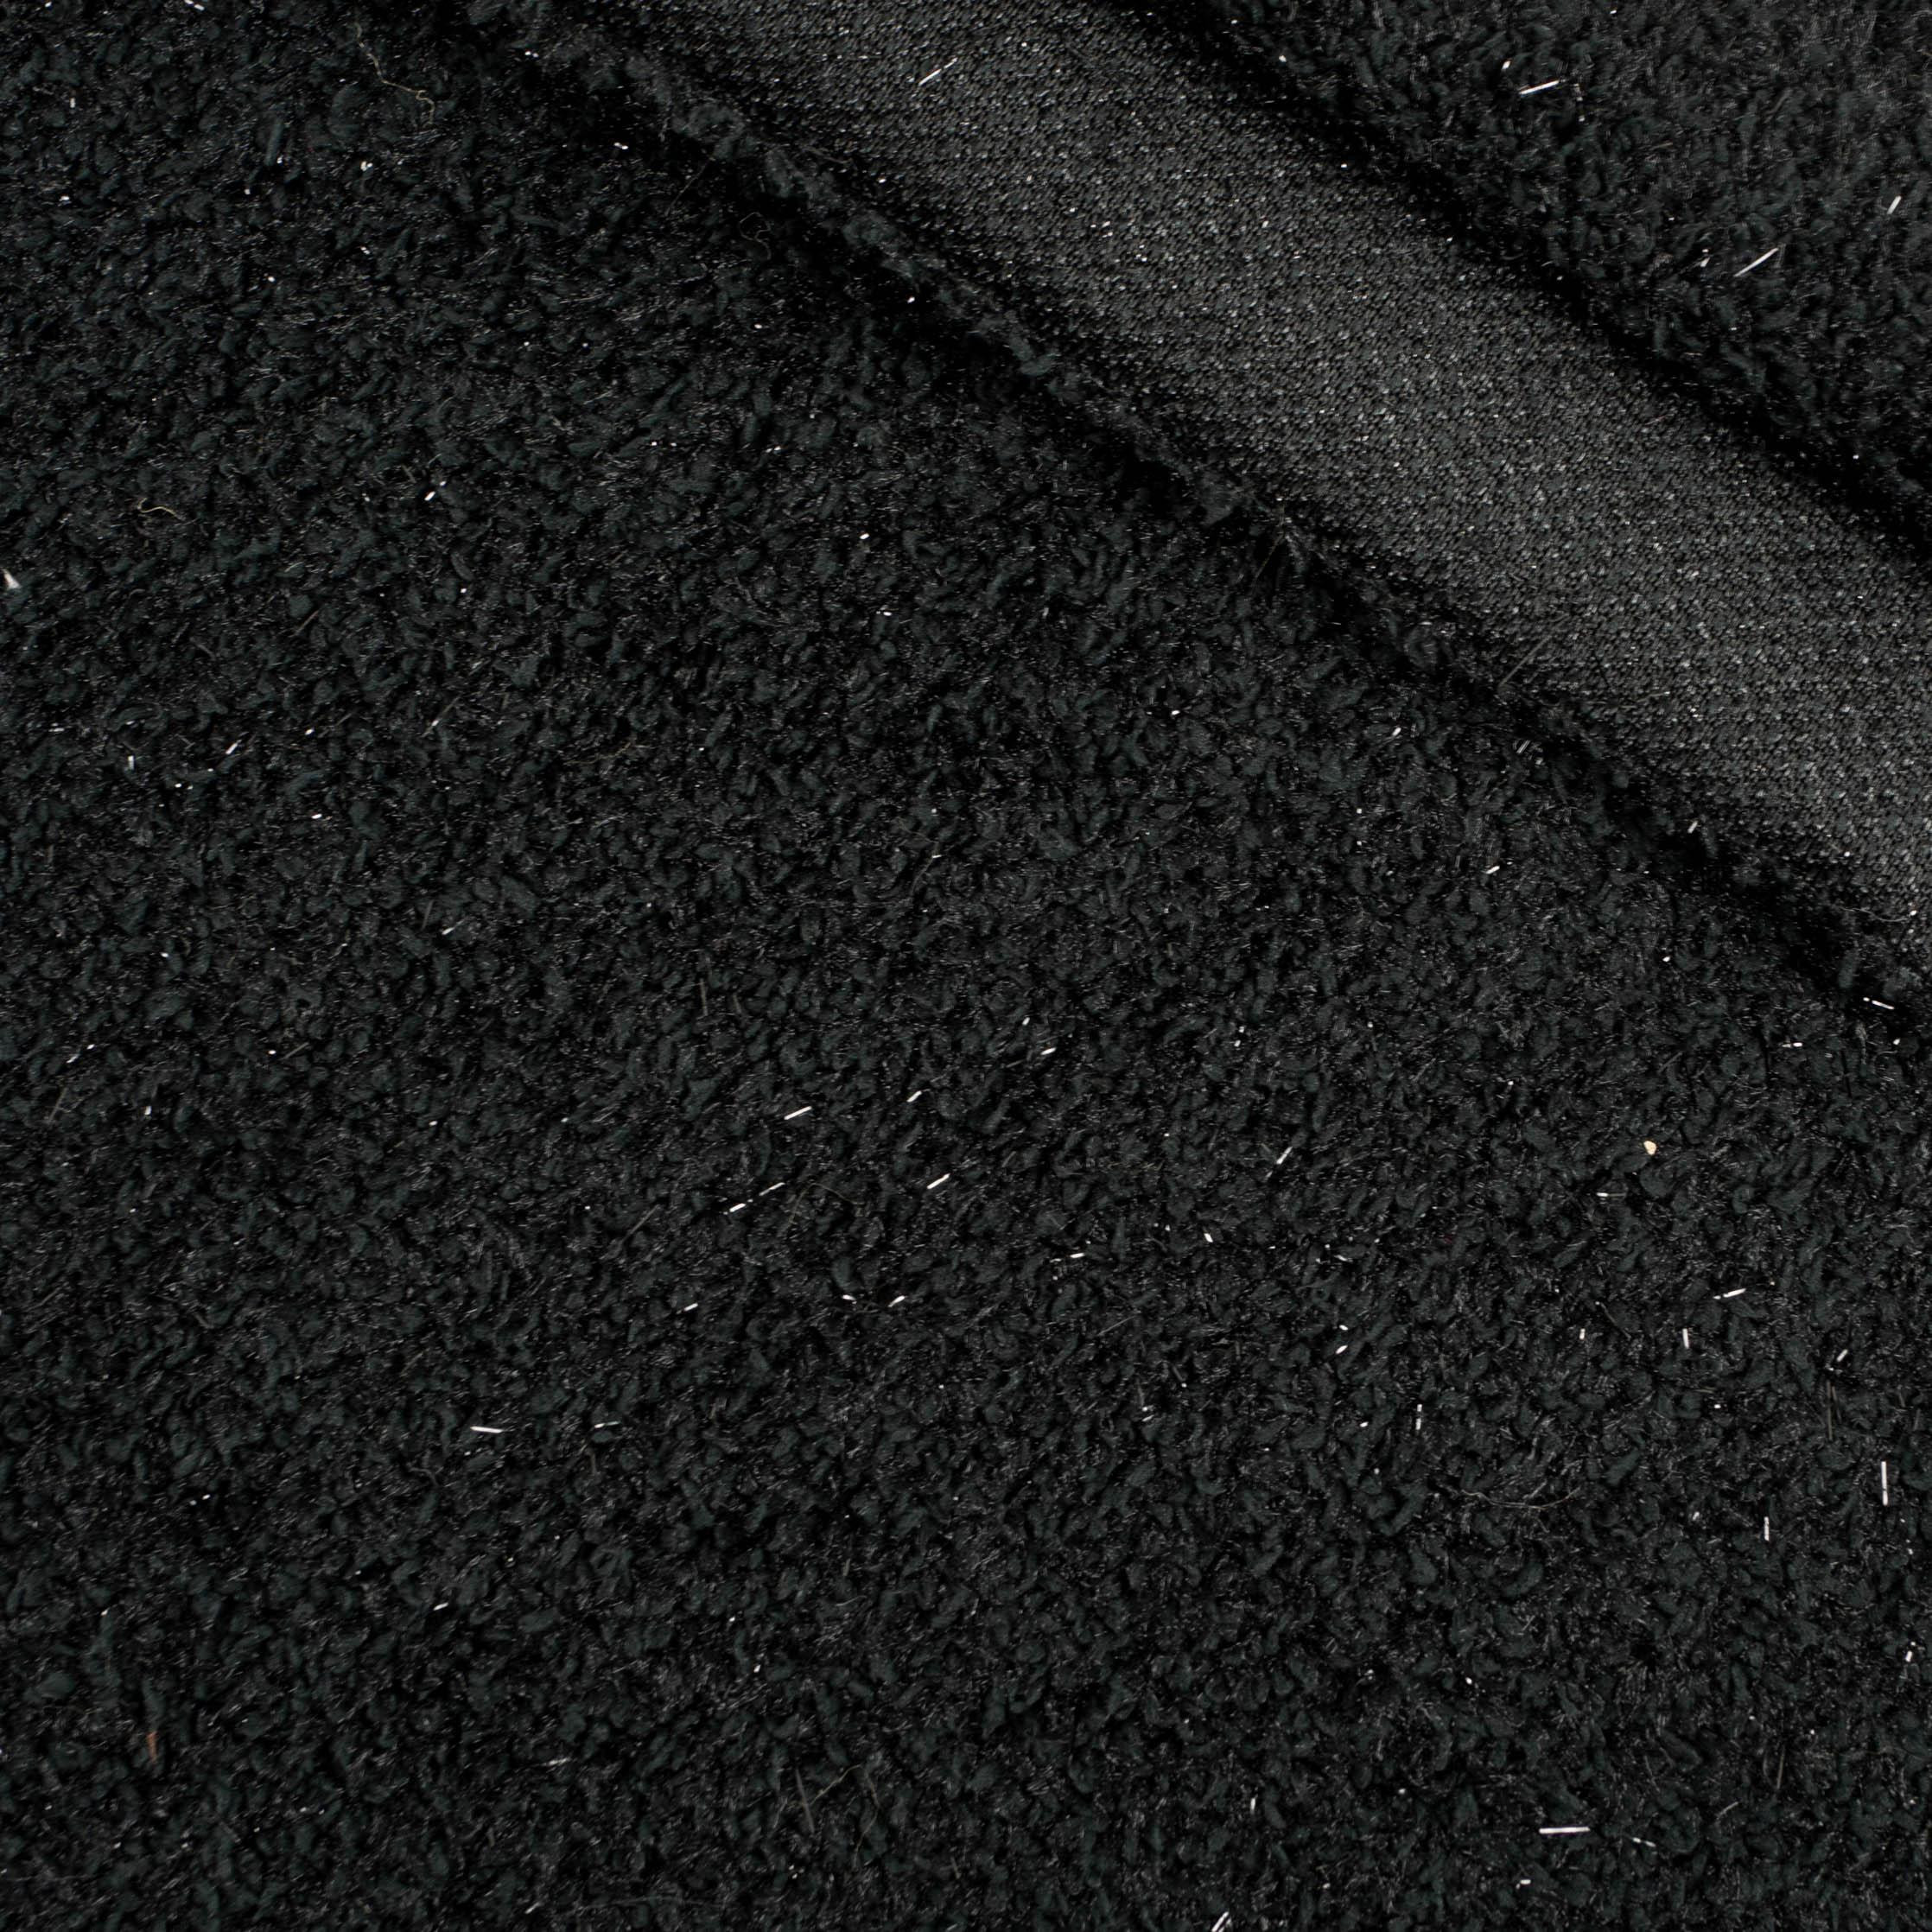 BLACK - LAMB FLEECE with lurex thread